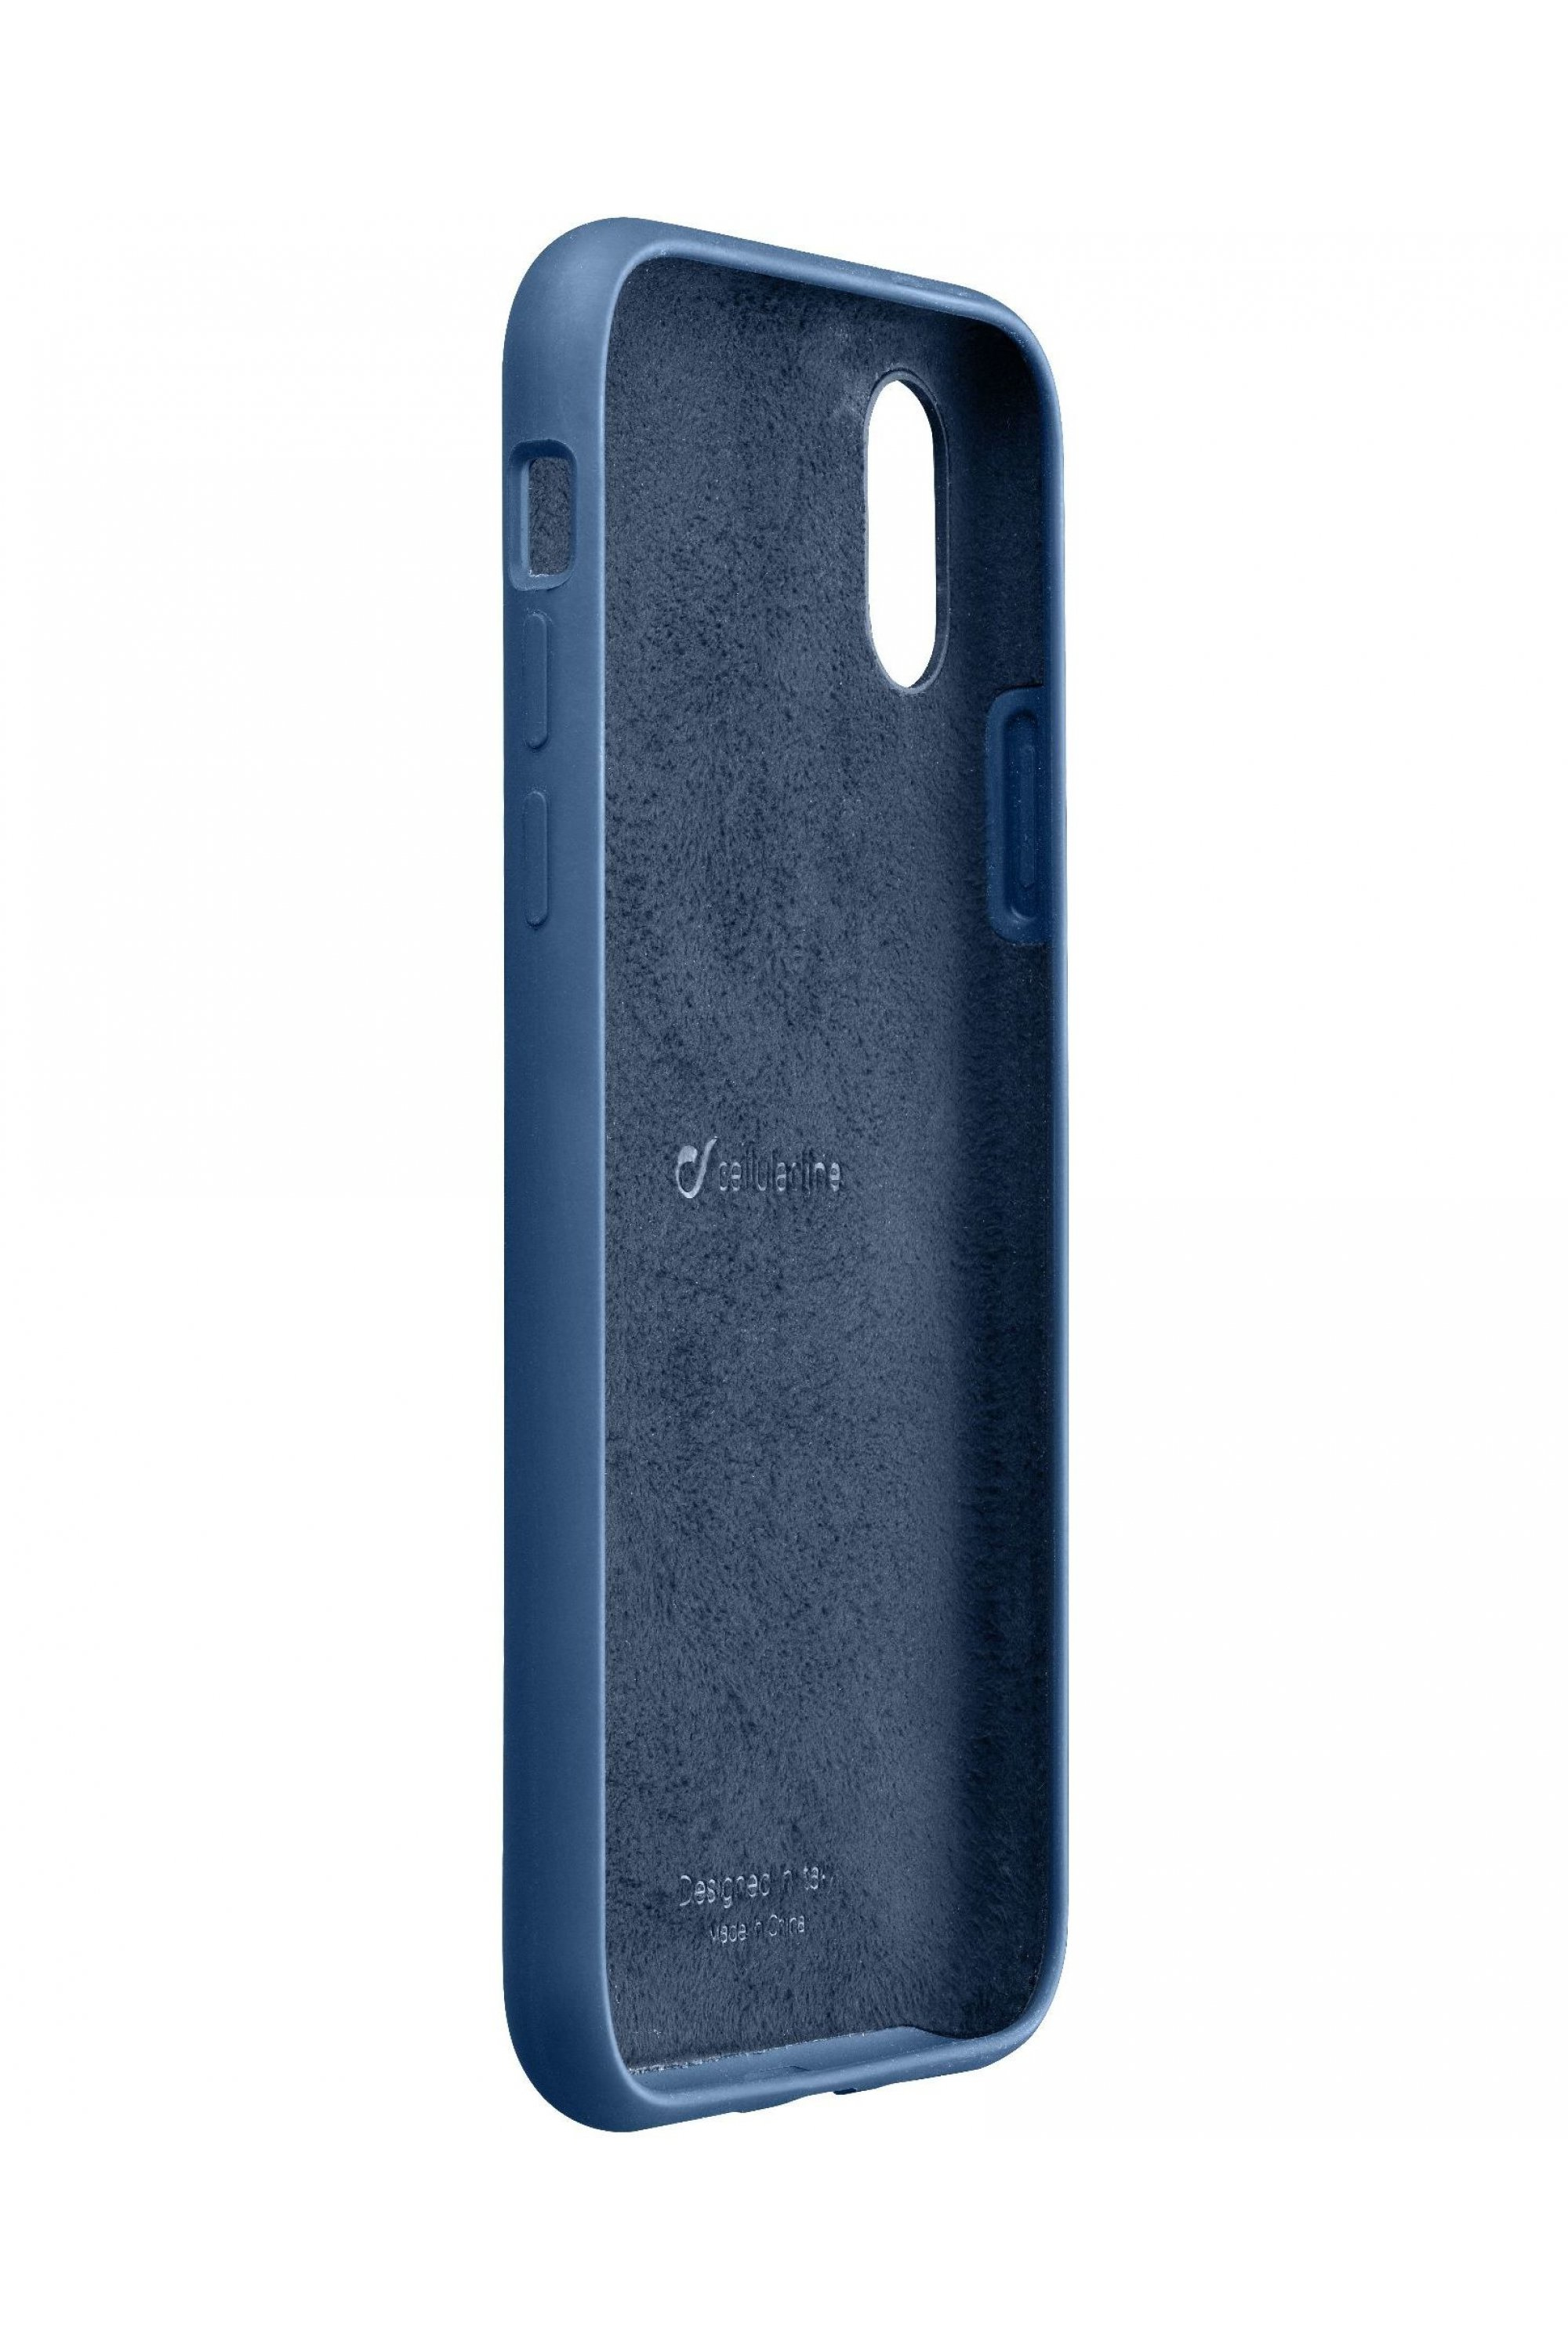 CellularLine Sensation Soft Touch Case Blue for iPhone XR